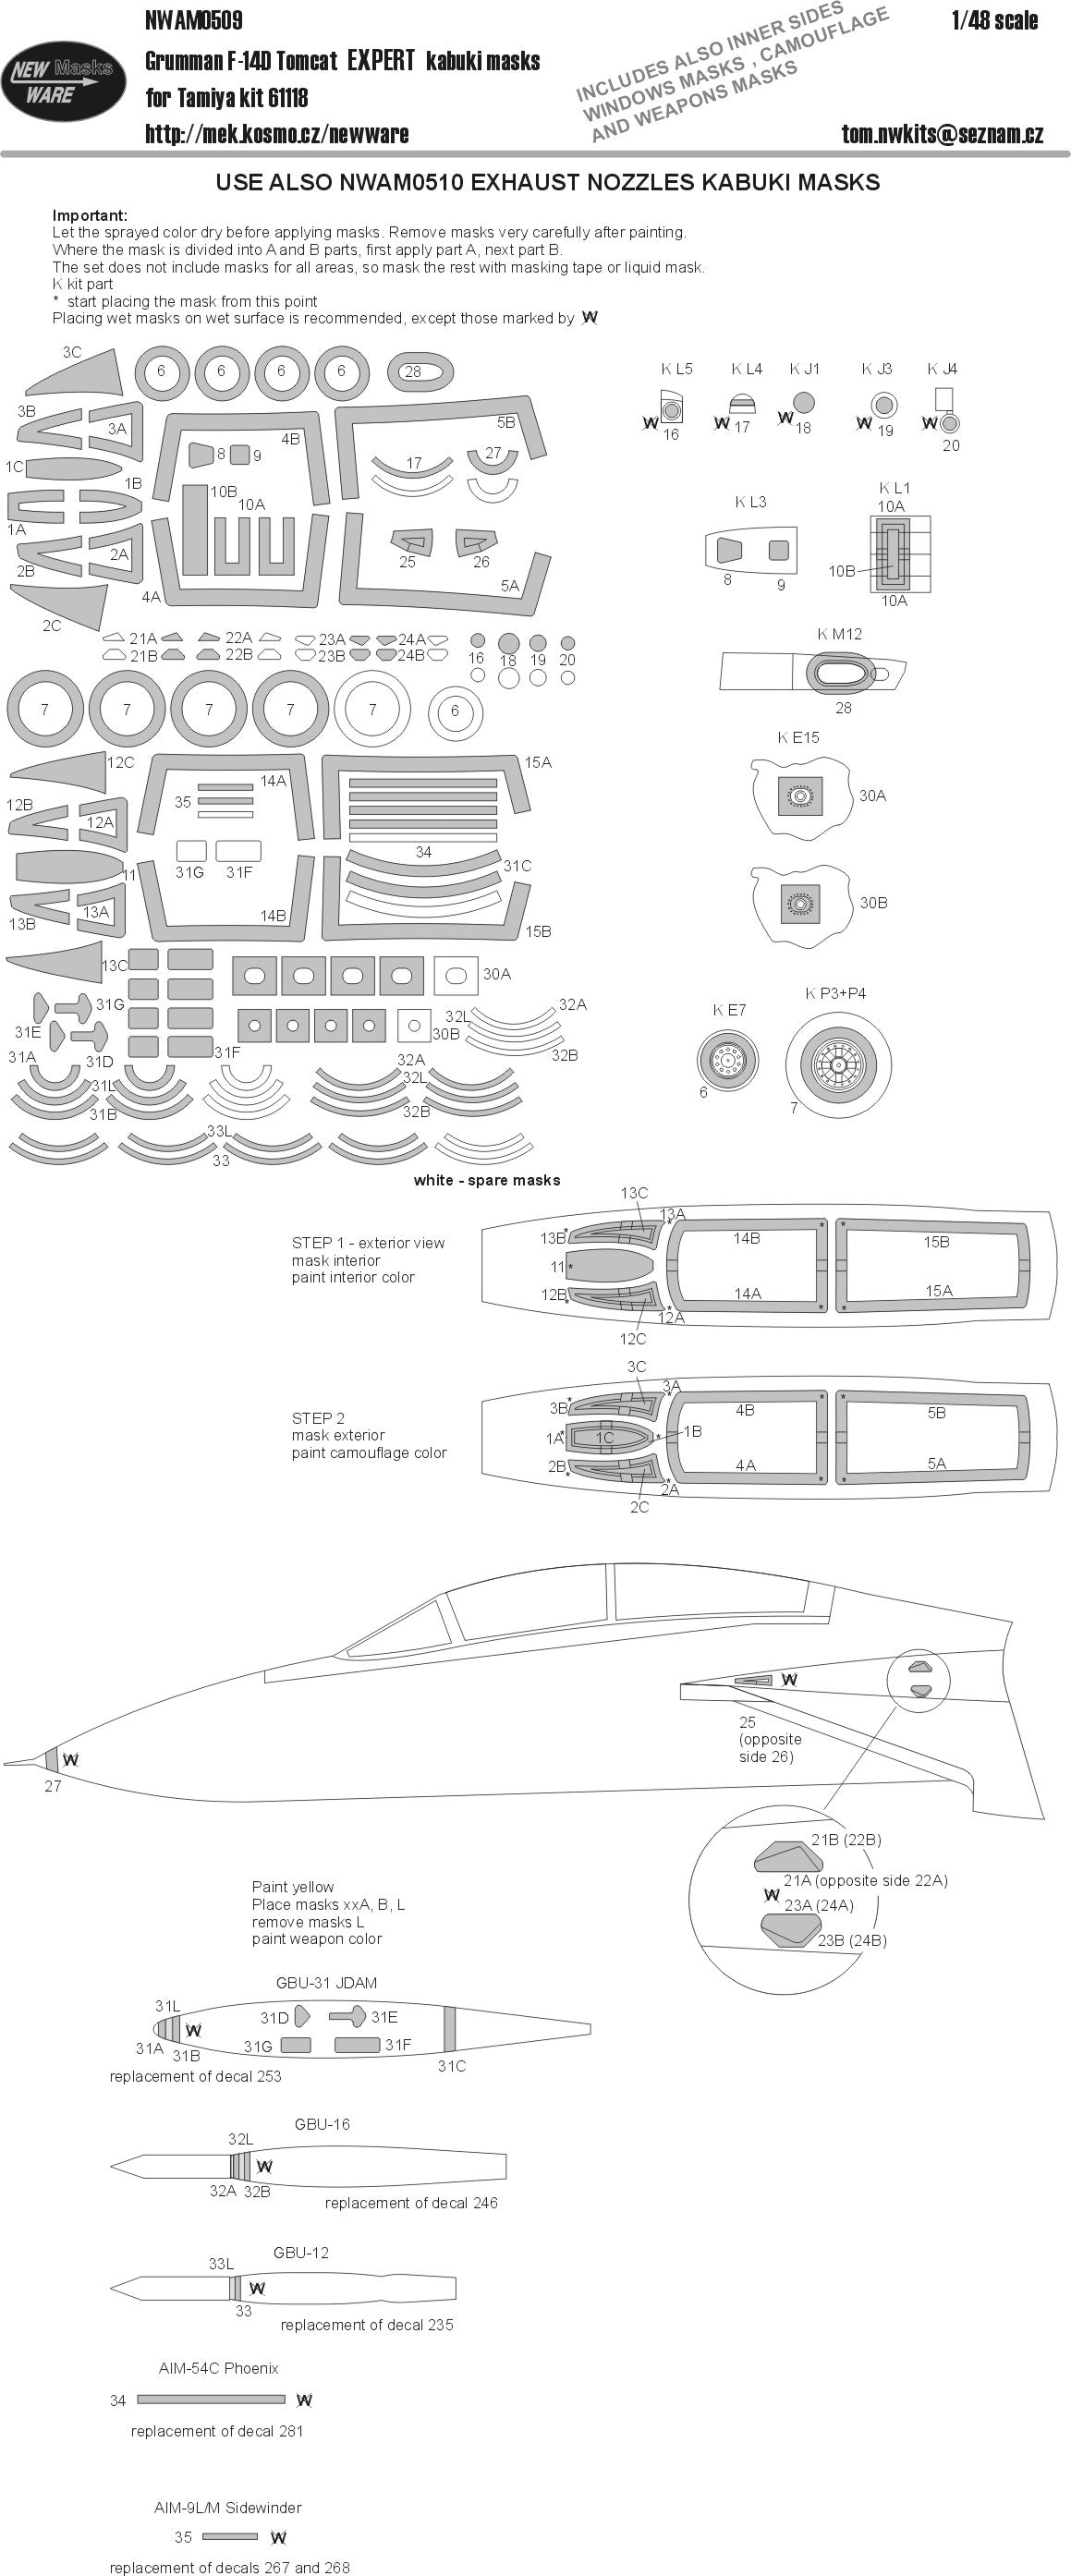 New Ware 0509 - Masking set for Tamiya 1/48 F-14D Tomcat EXPERT